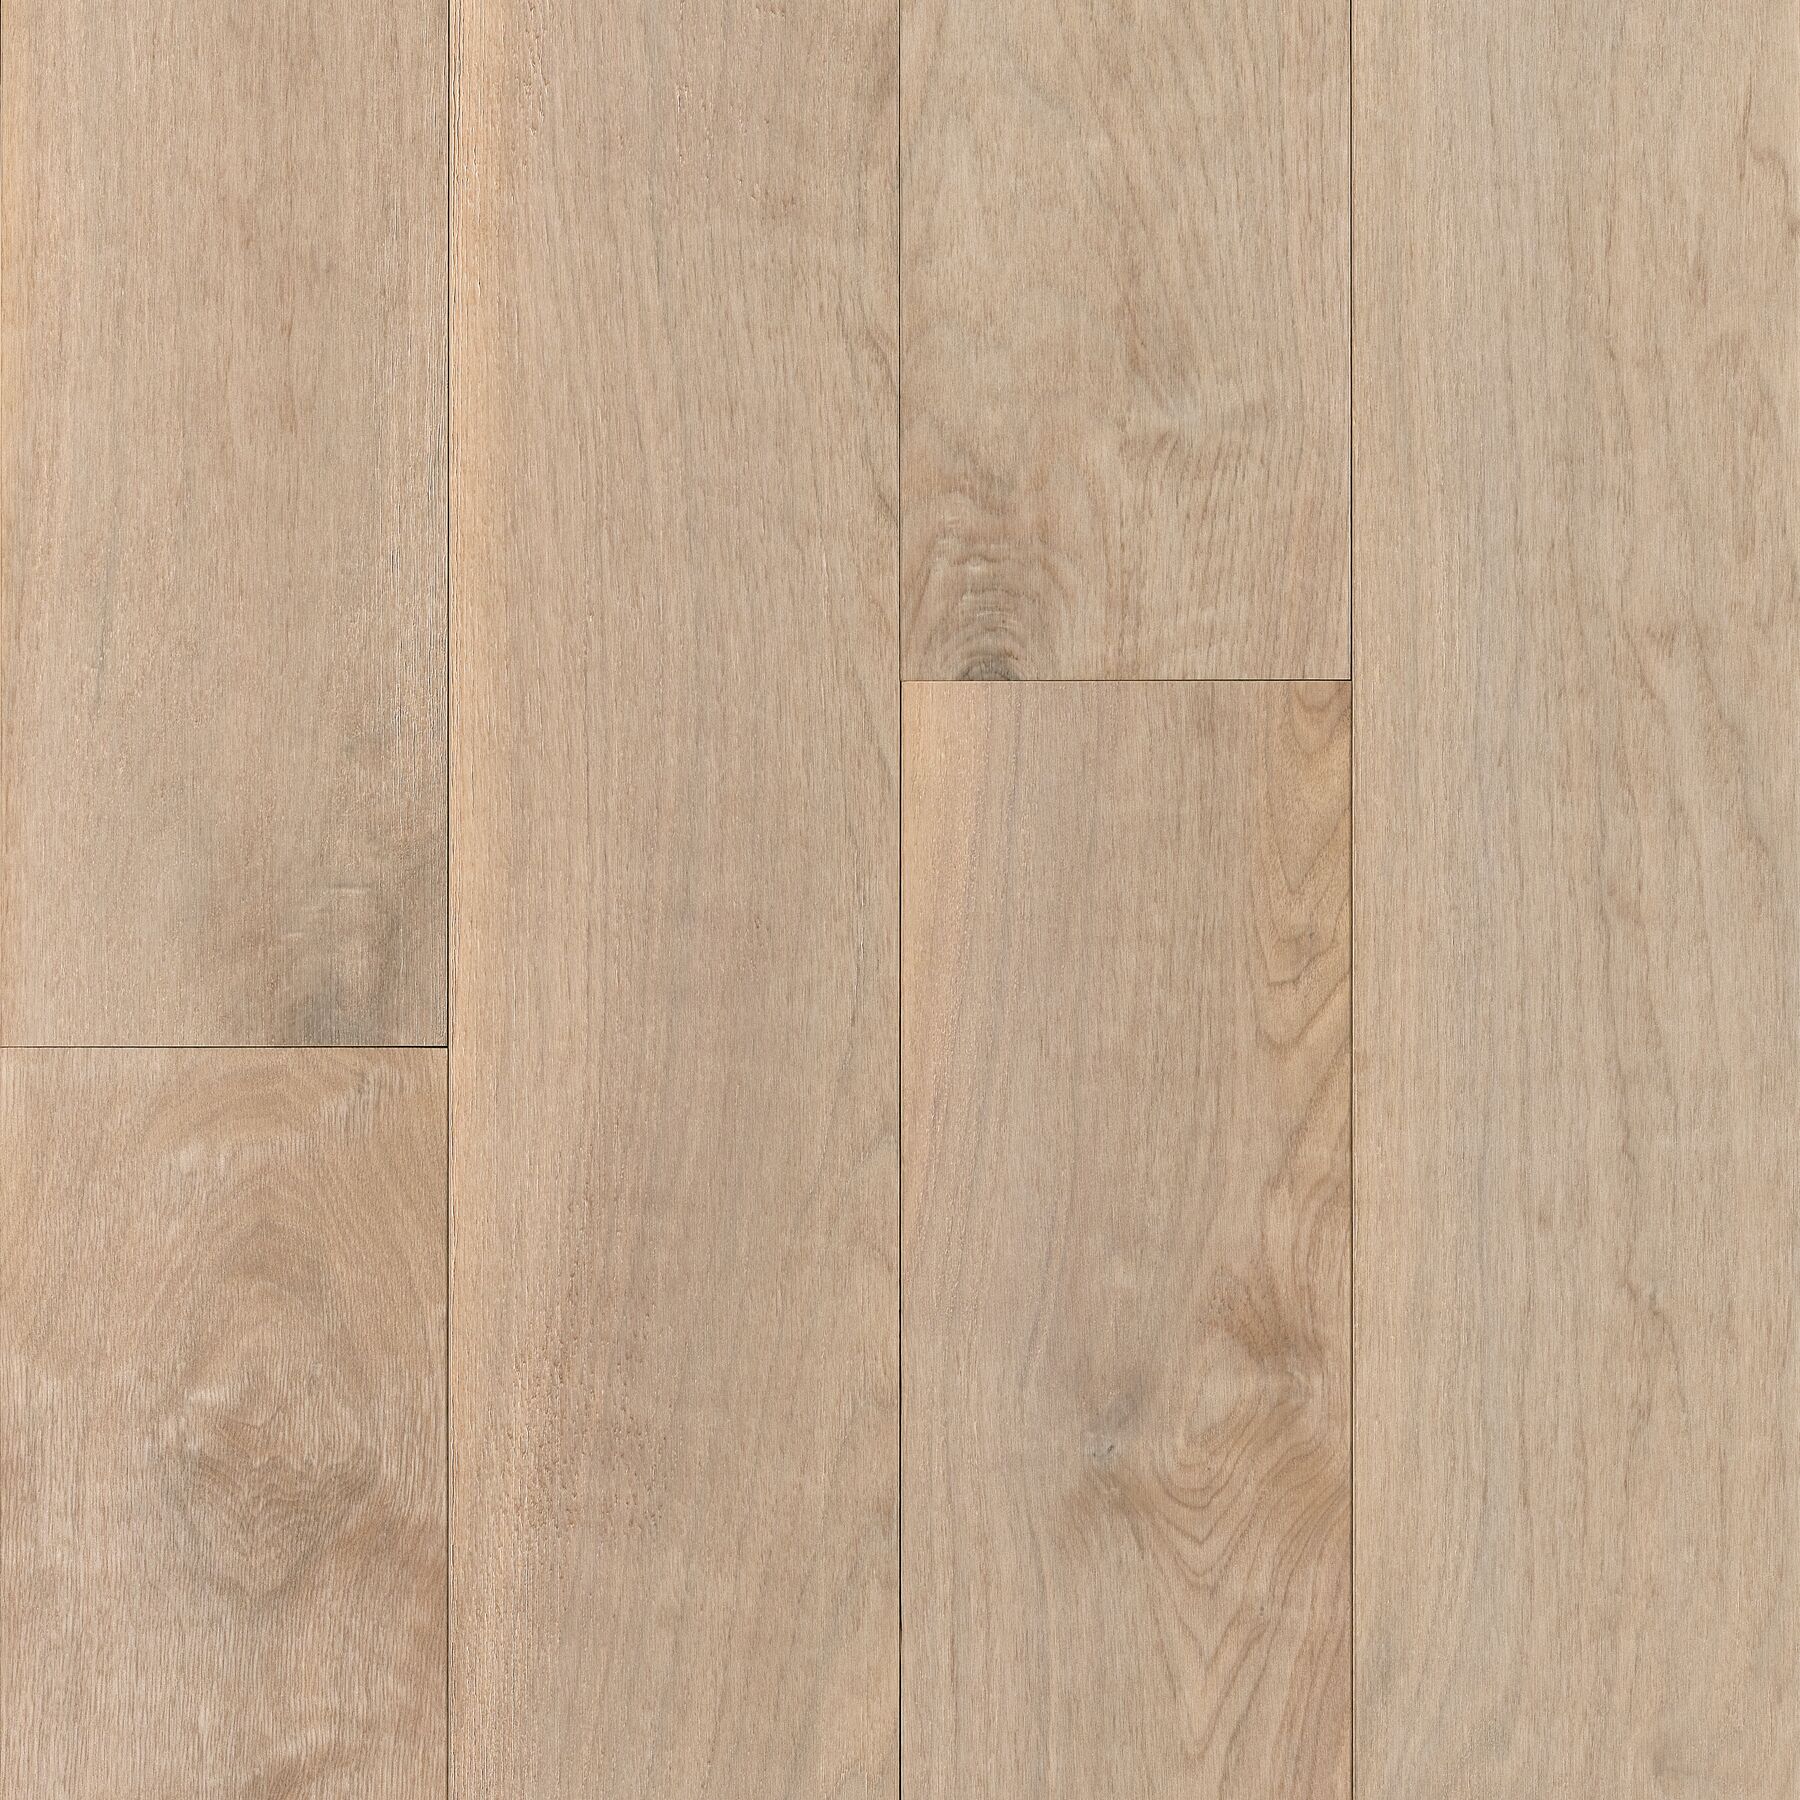 Siberian Dogwood Densified Wood Flooring with hardened wood